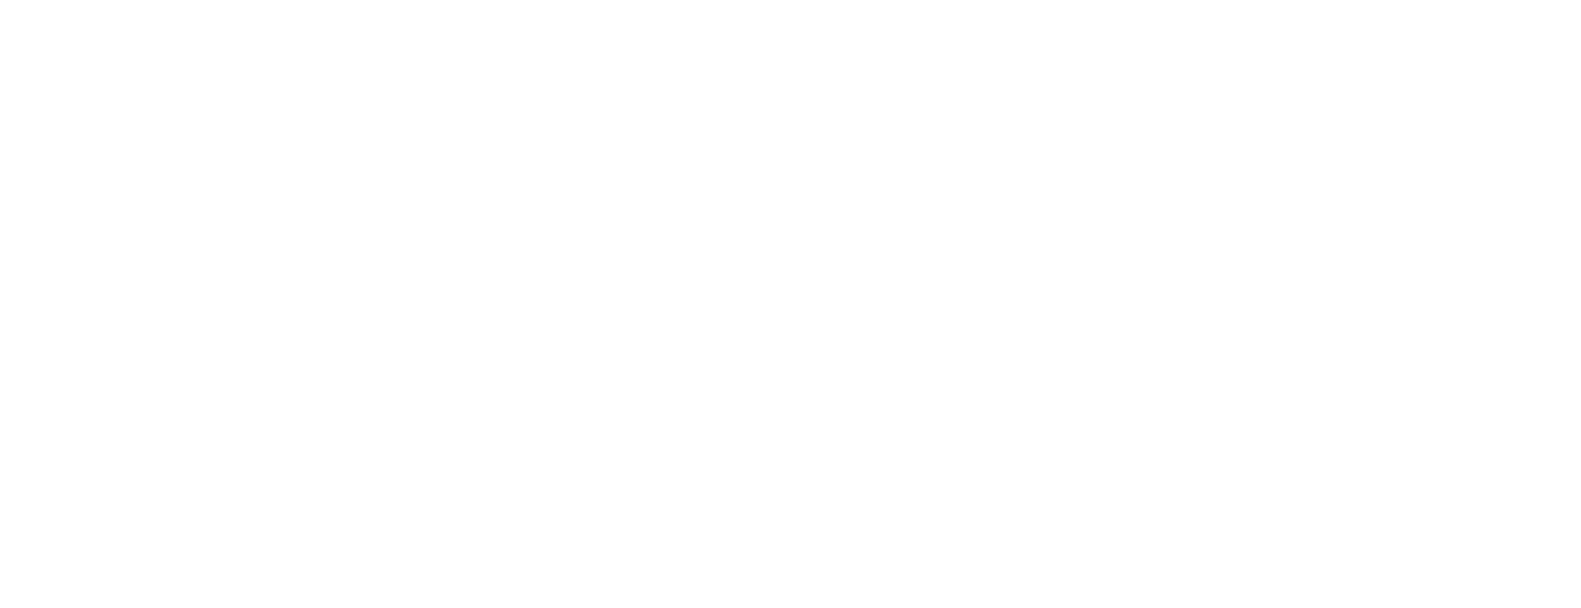 Home Federal Bancorp (HFB Bank) logo large for dark backgrounds (transparent PNG)